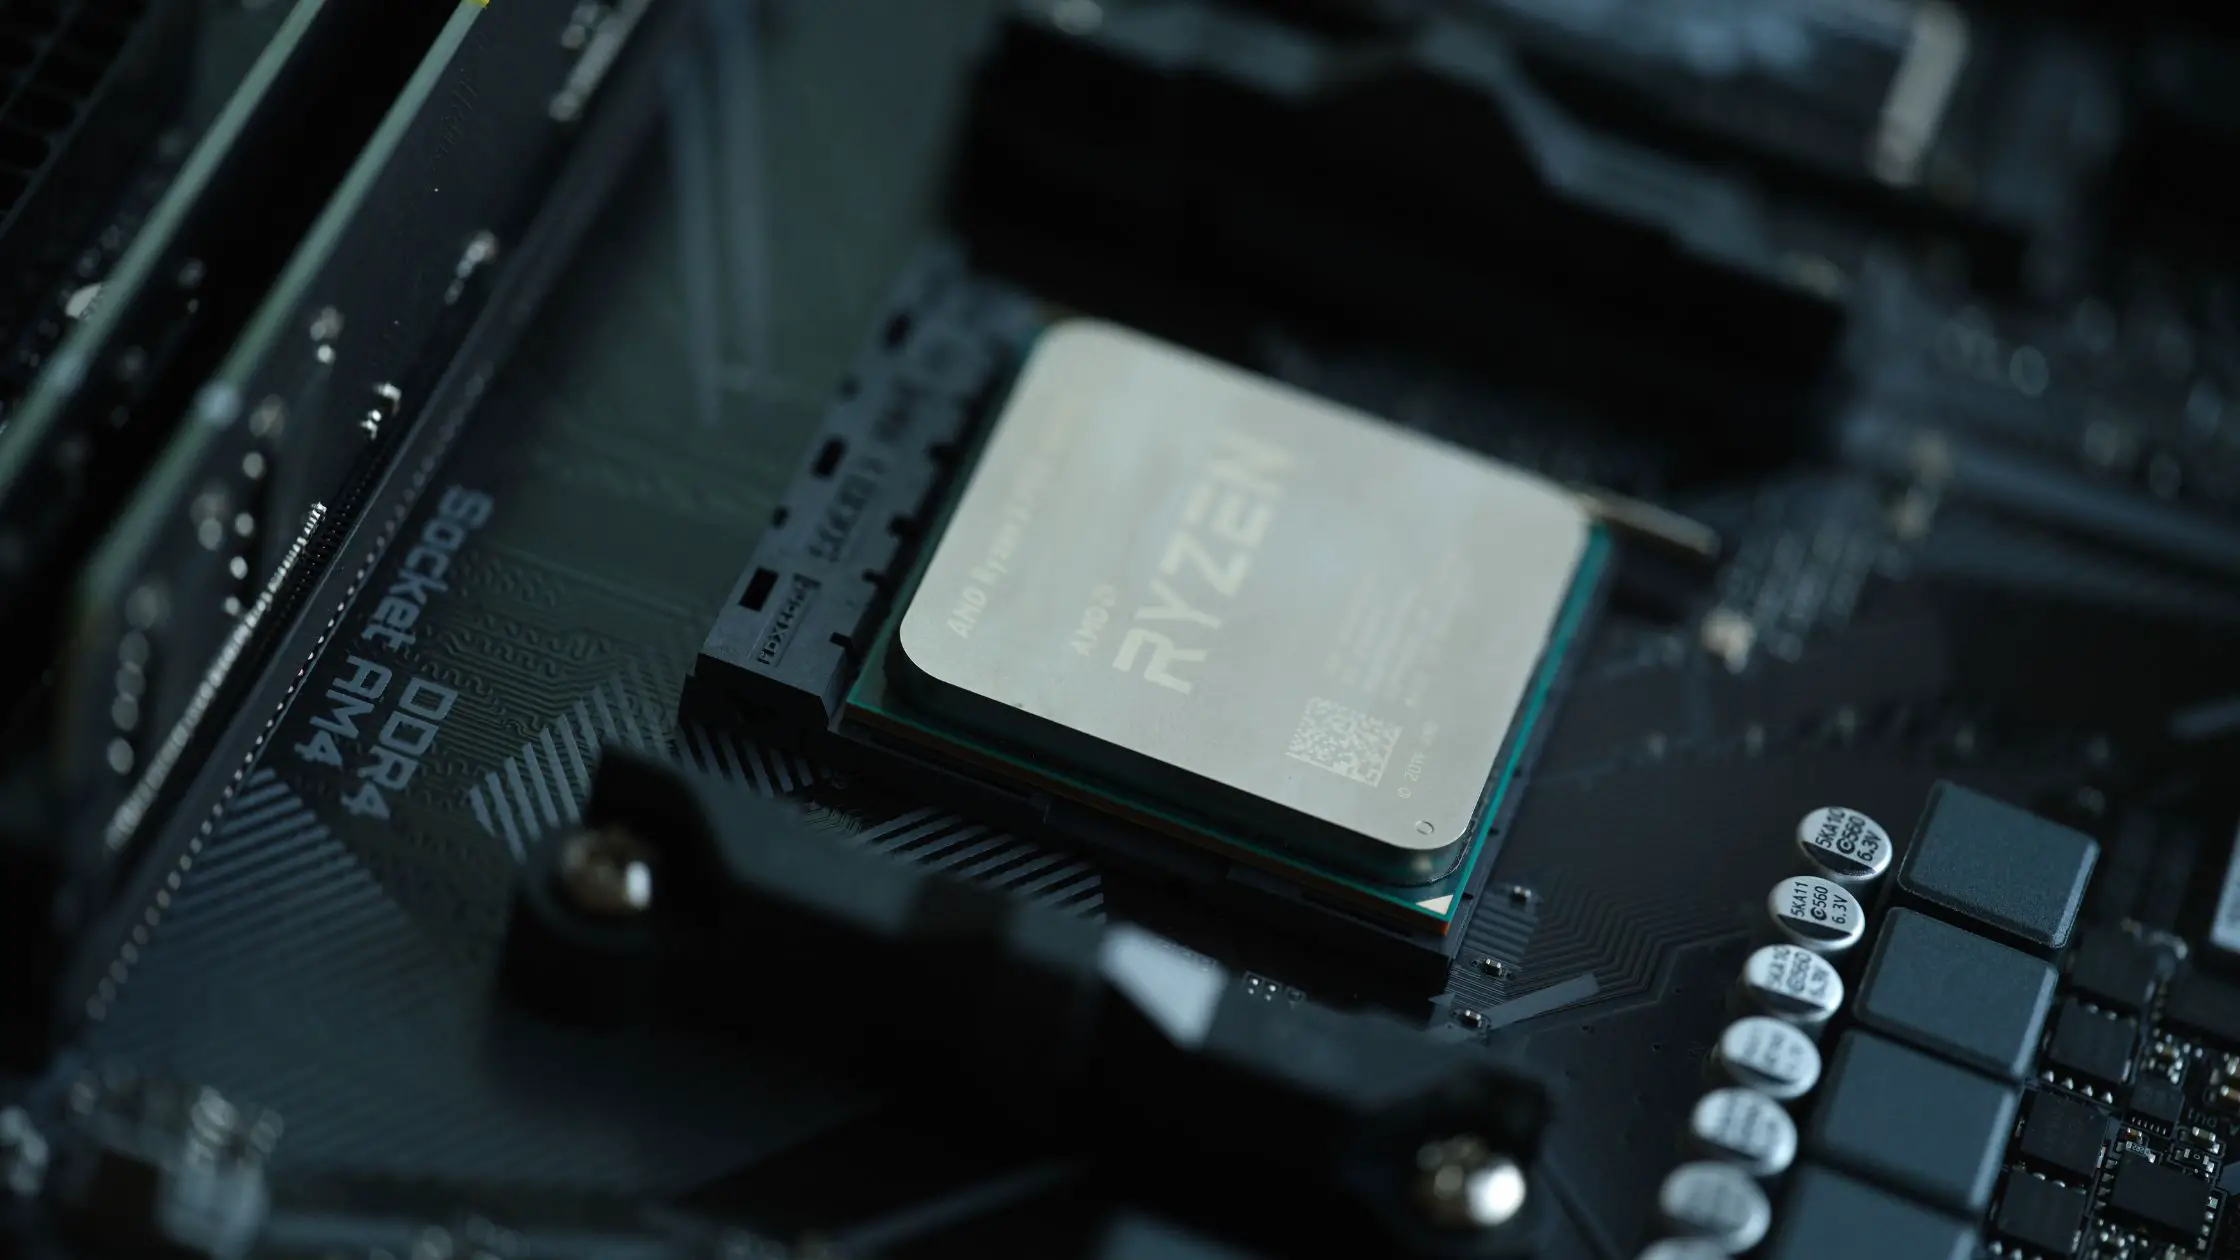 Best GPUS for AMD Ryzen 7 5700G